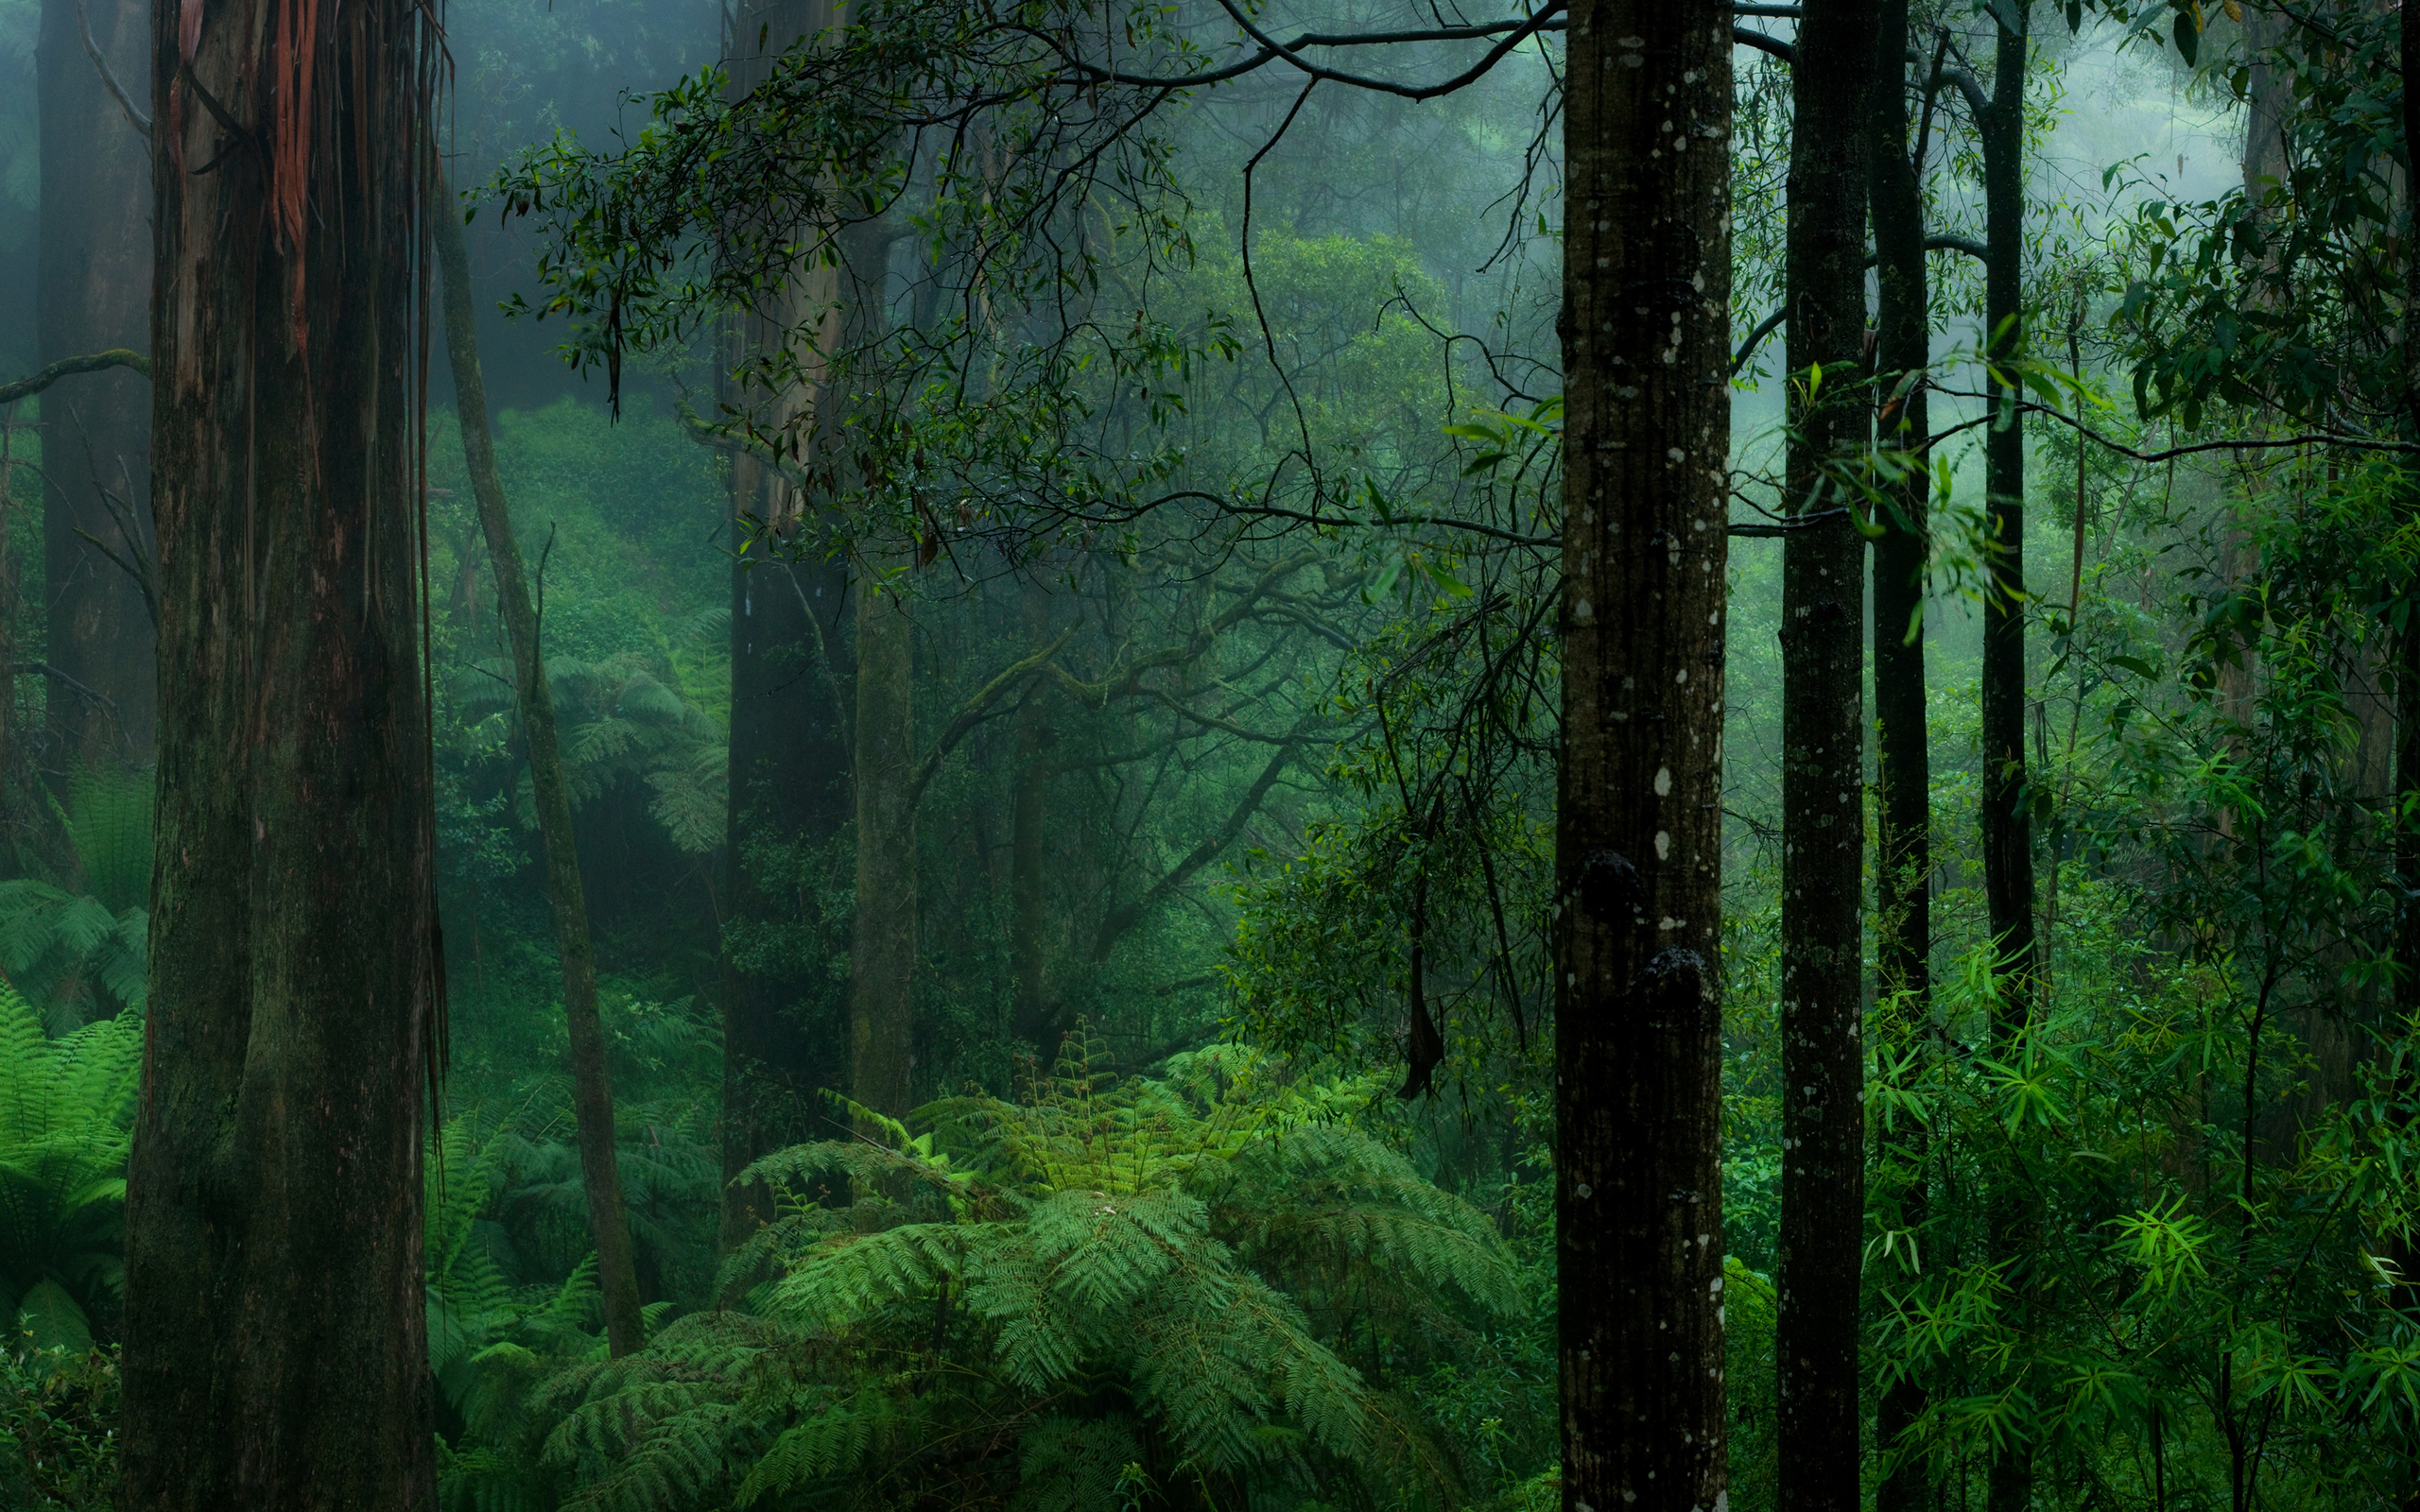 Misty forest - HD - Wallpaper | Northern Art Photos